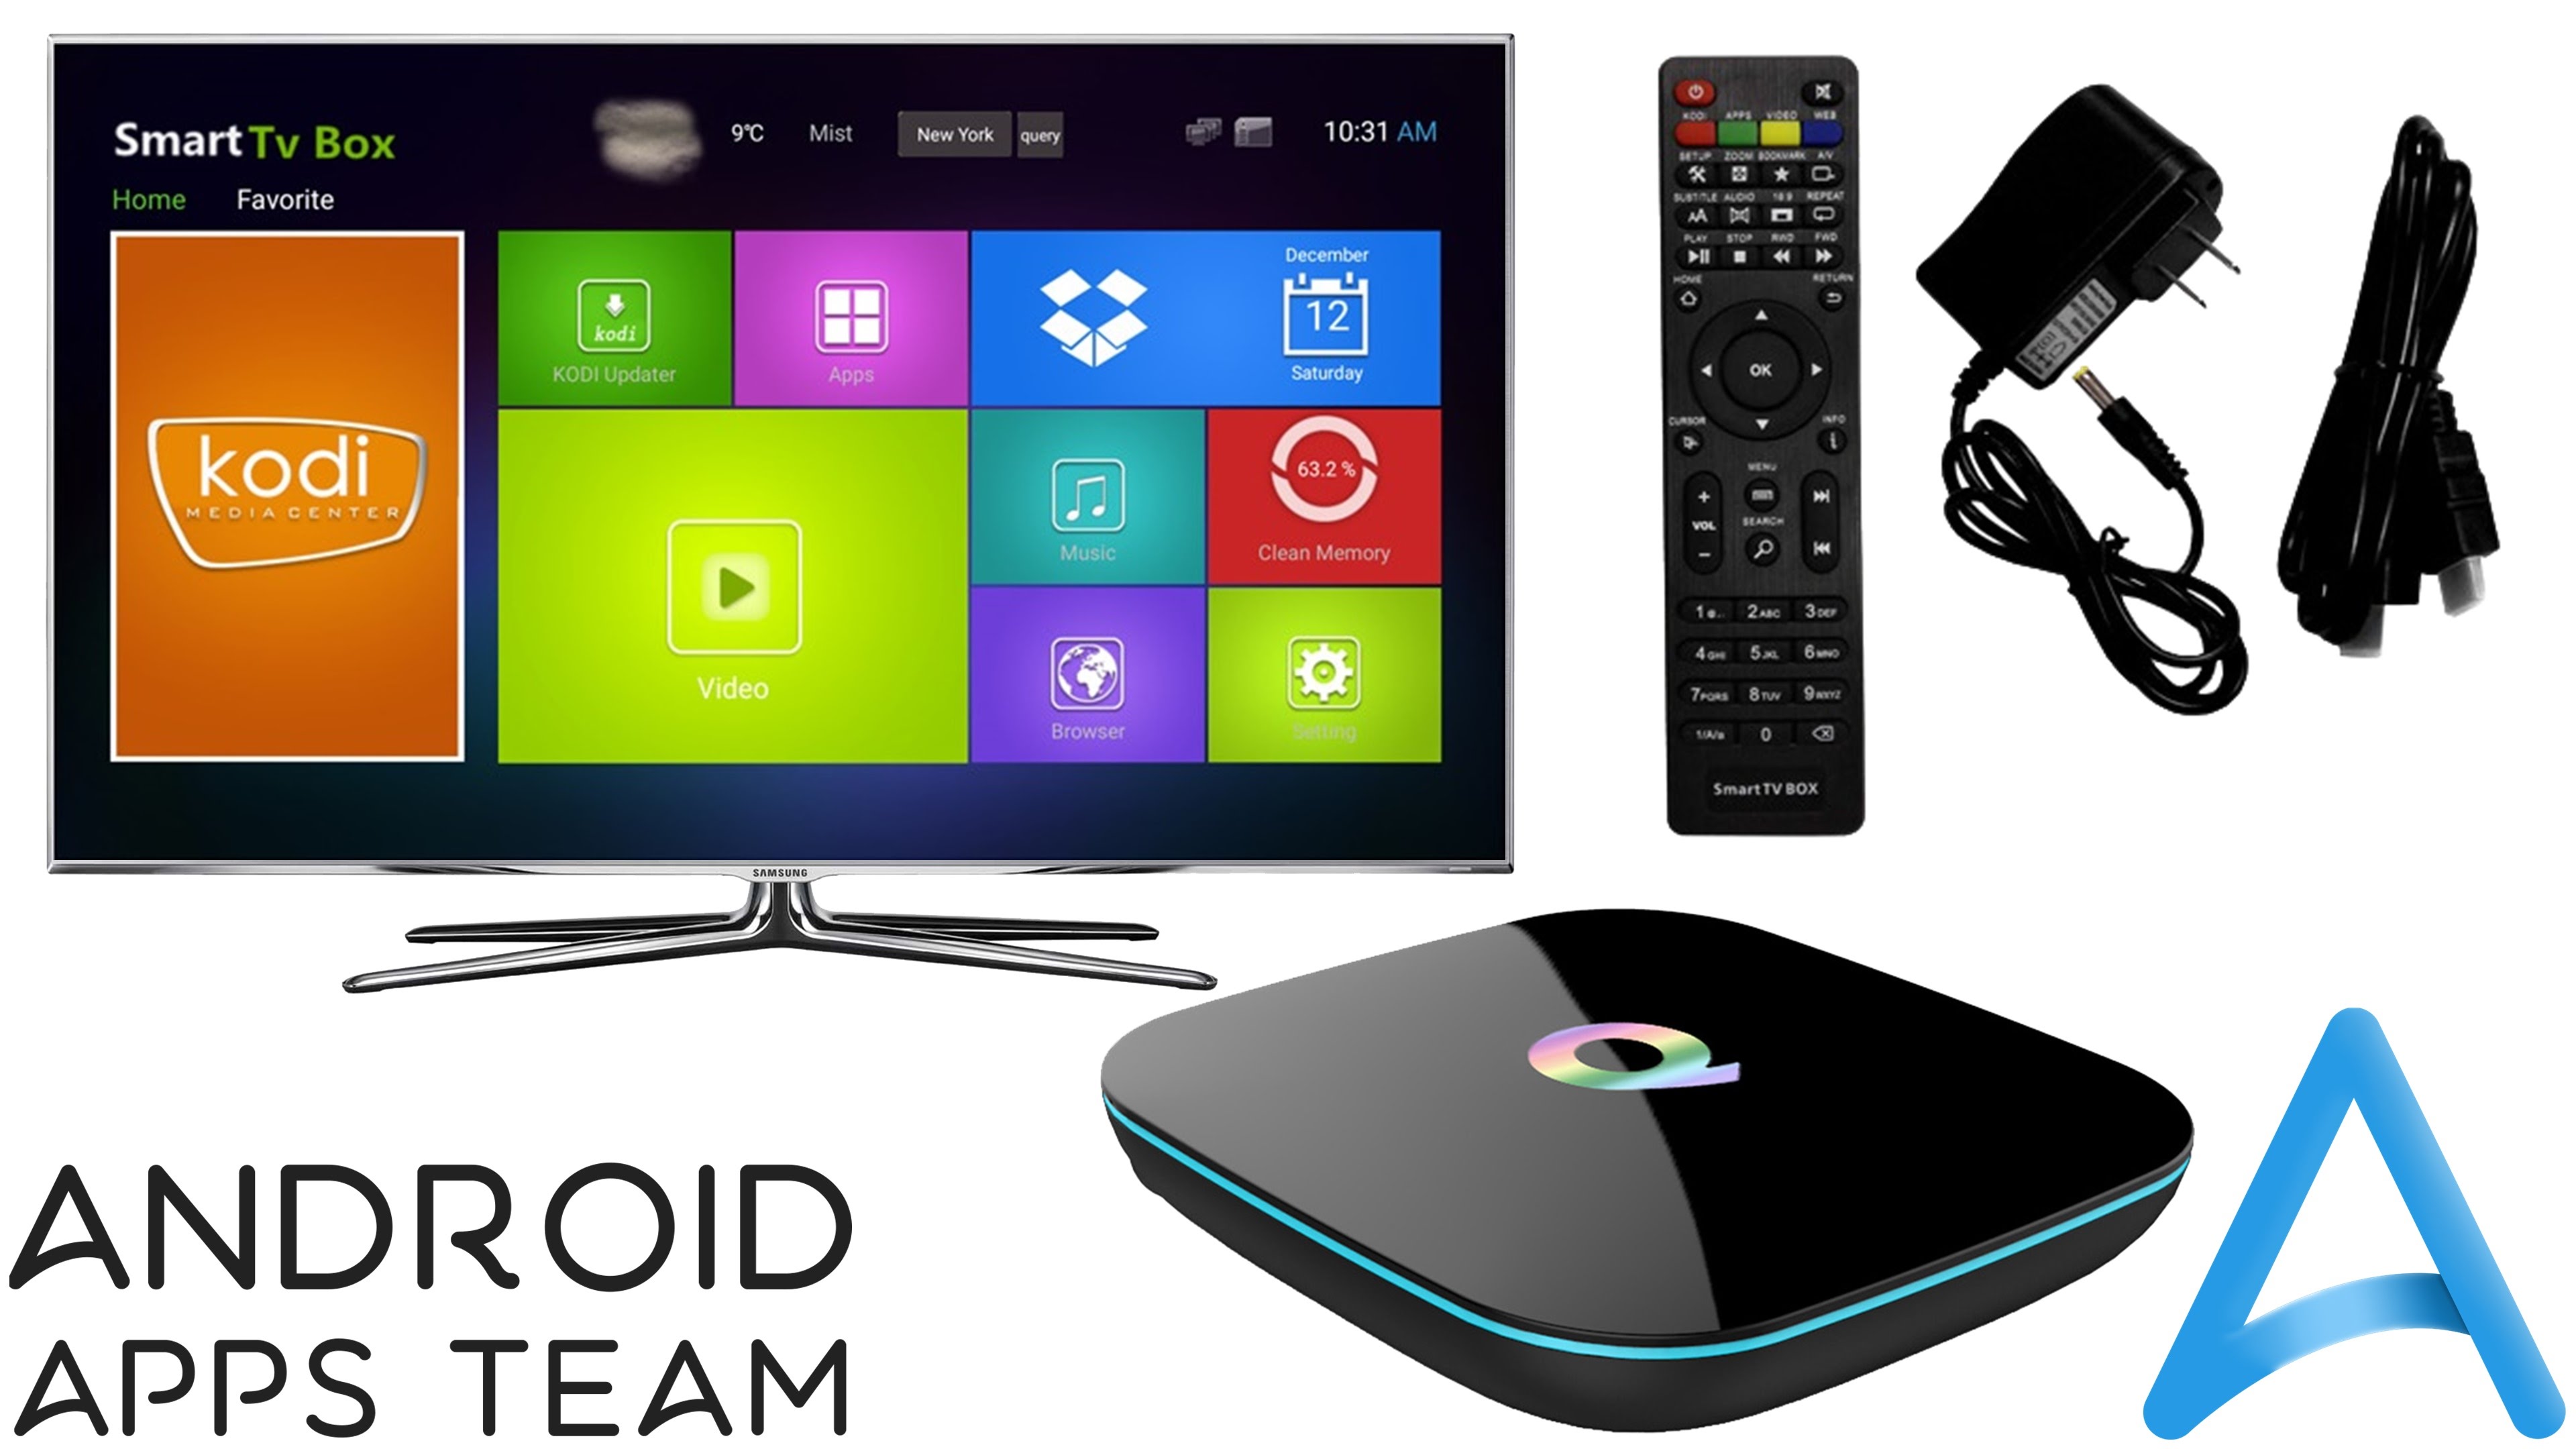 Приставка смарт карта. Смарт ТВ q100w. Smart Box TV q1 Mini. Платформа Smart TV: Android TV a75lu6500. TV Box андроид приставка.